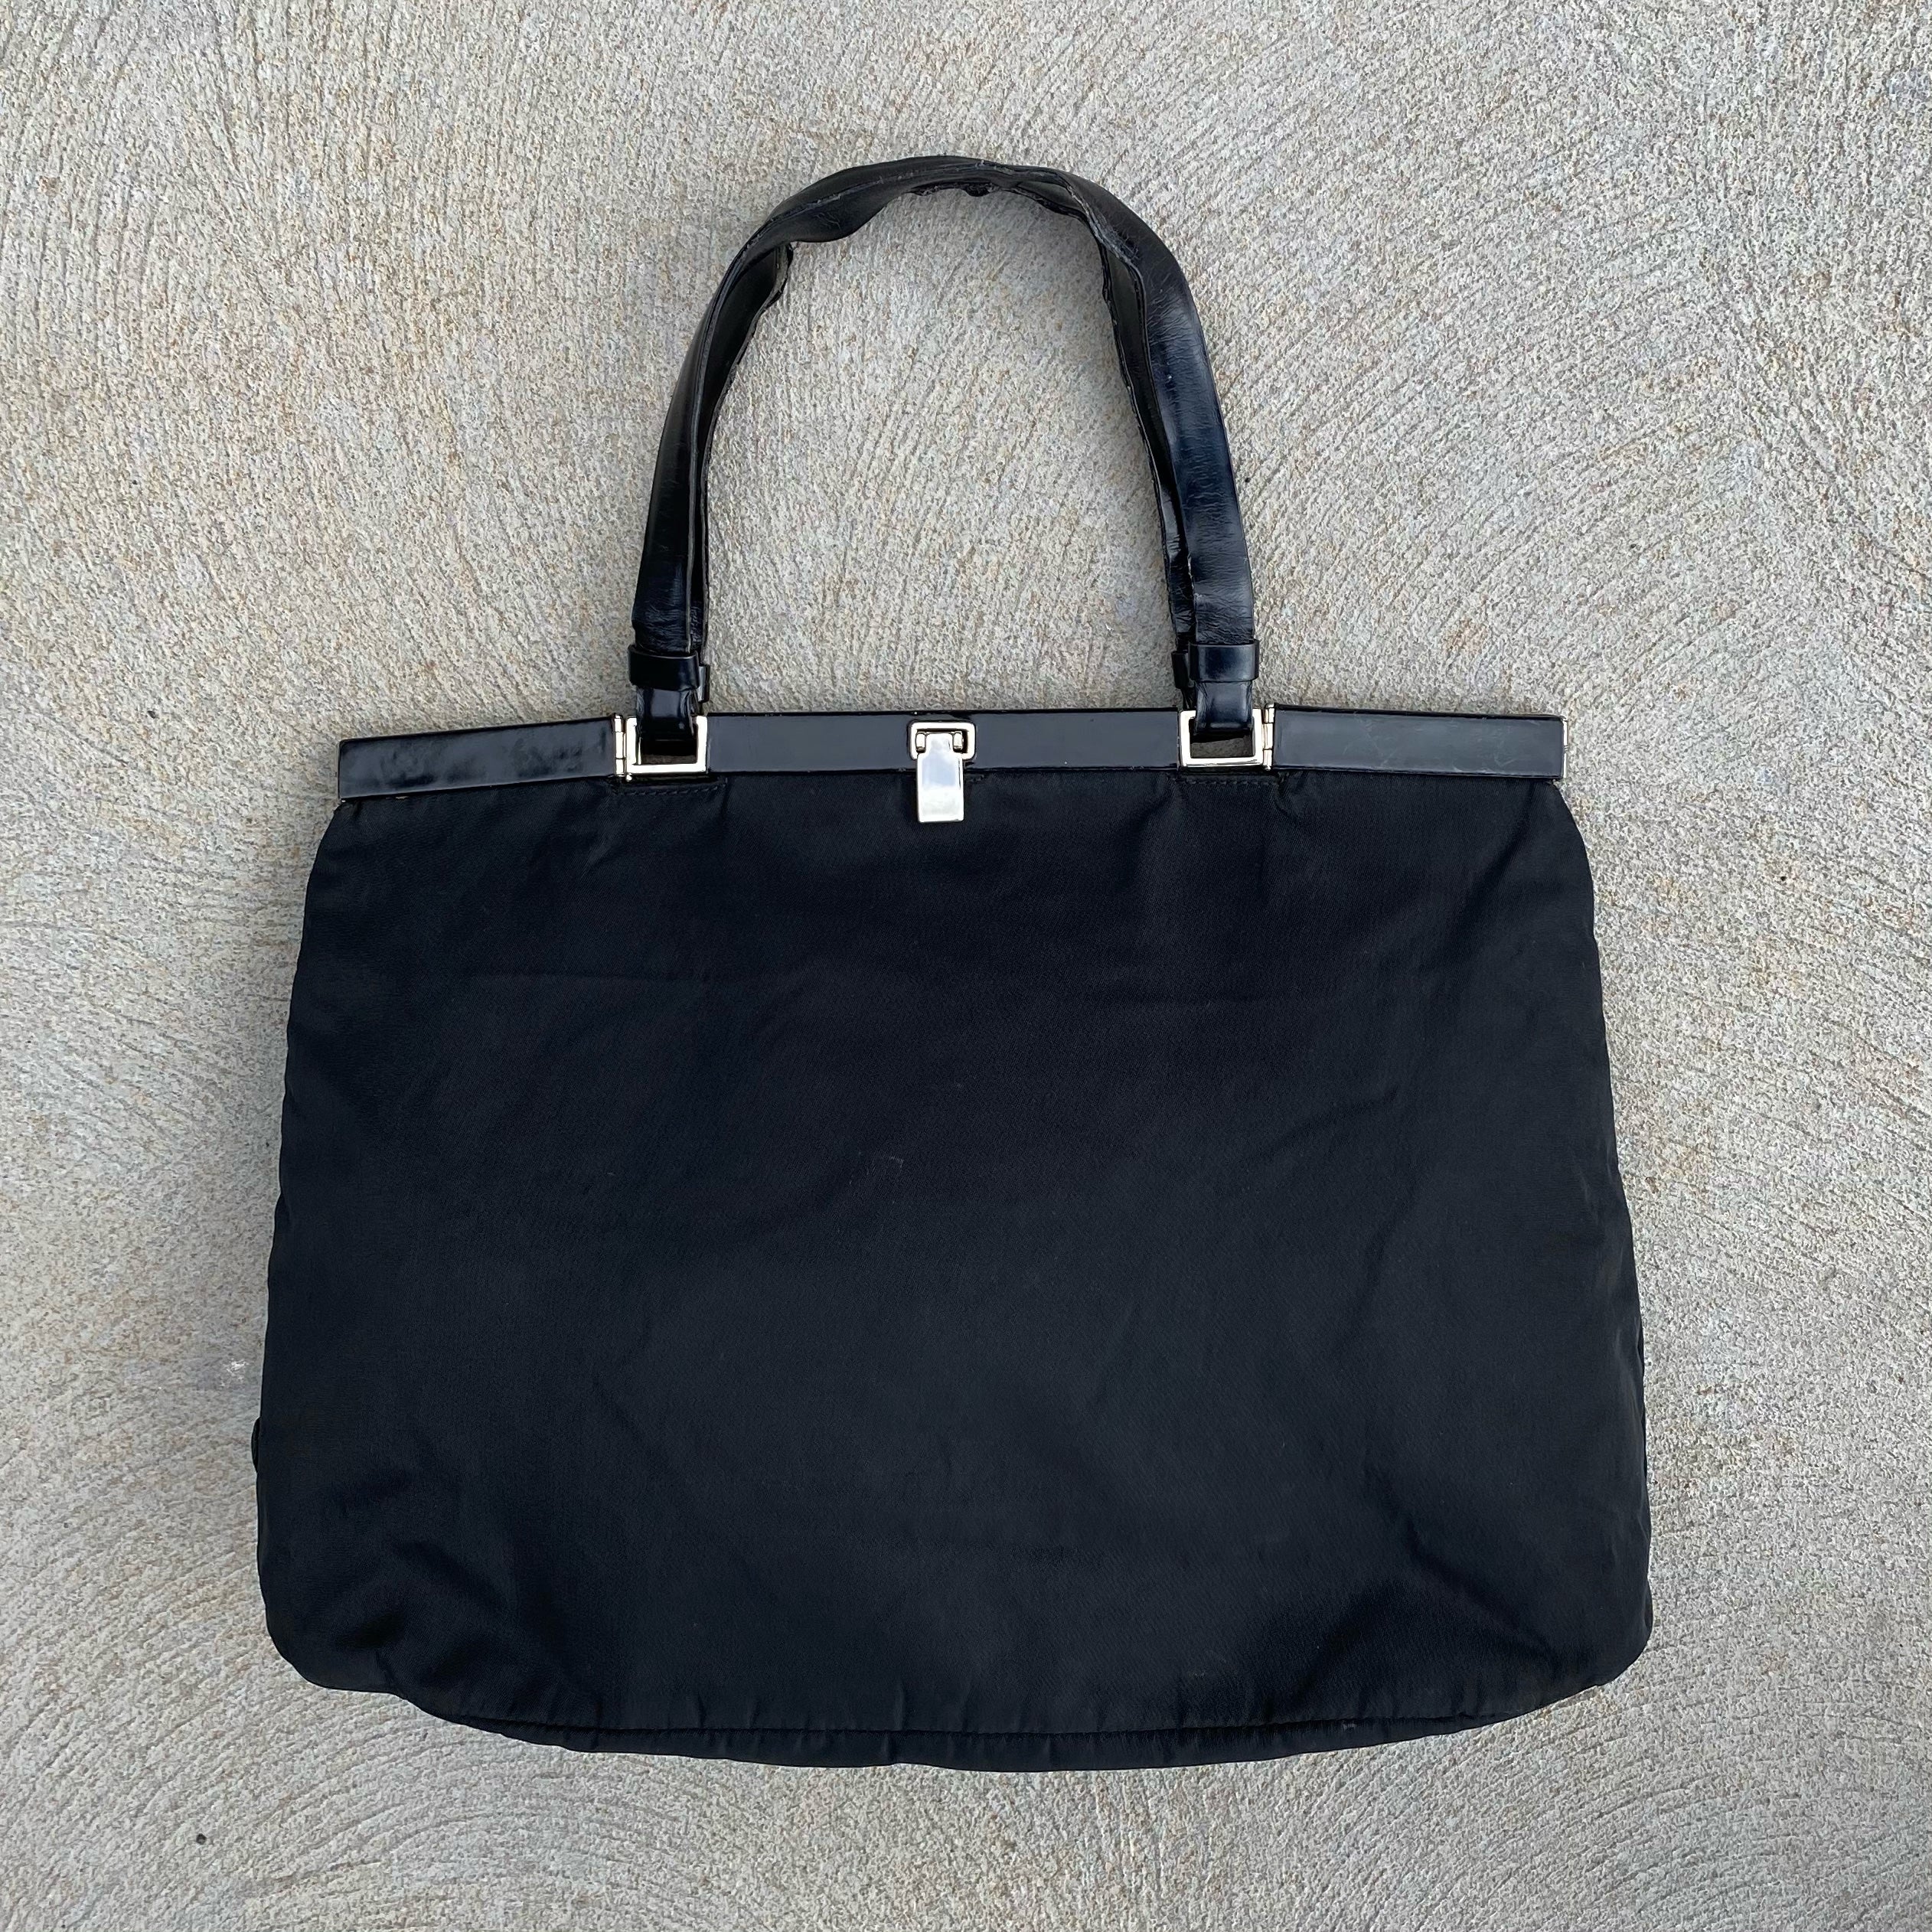 Prada Nylon Black Leather Strap Hand Bag